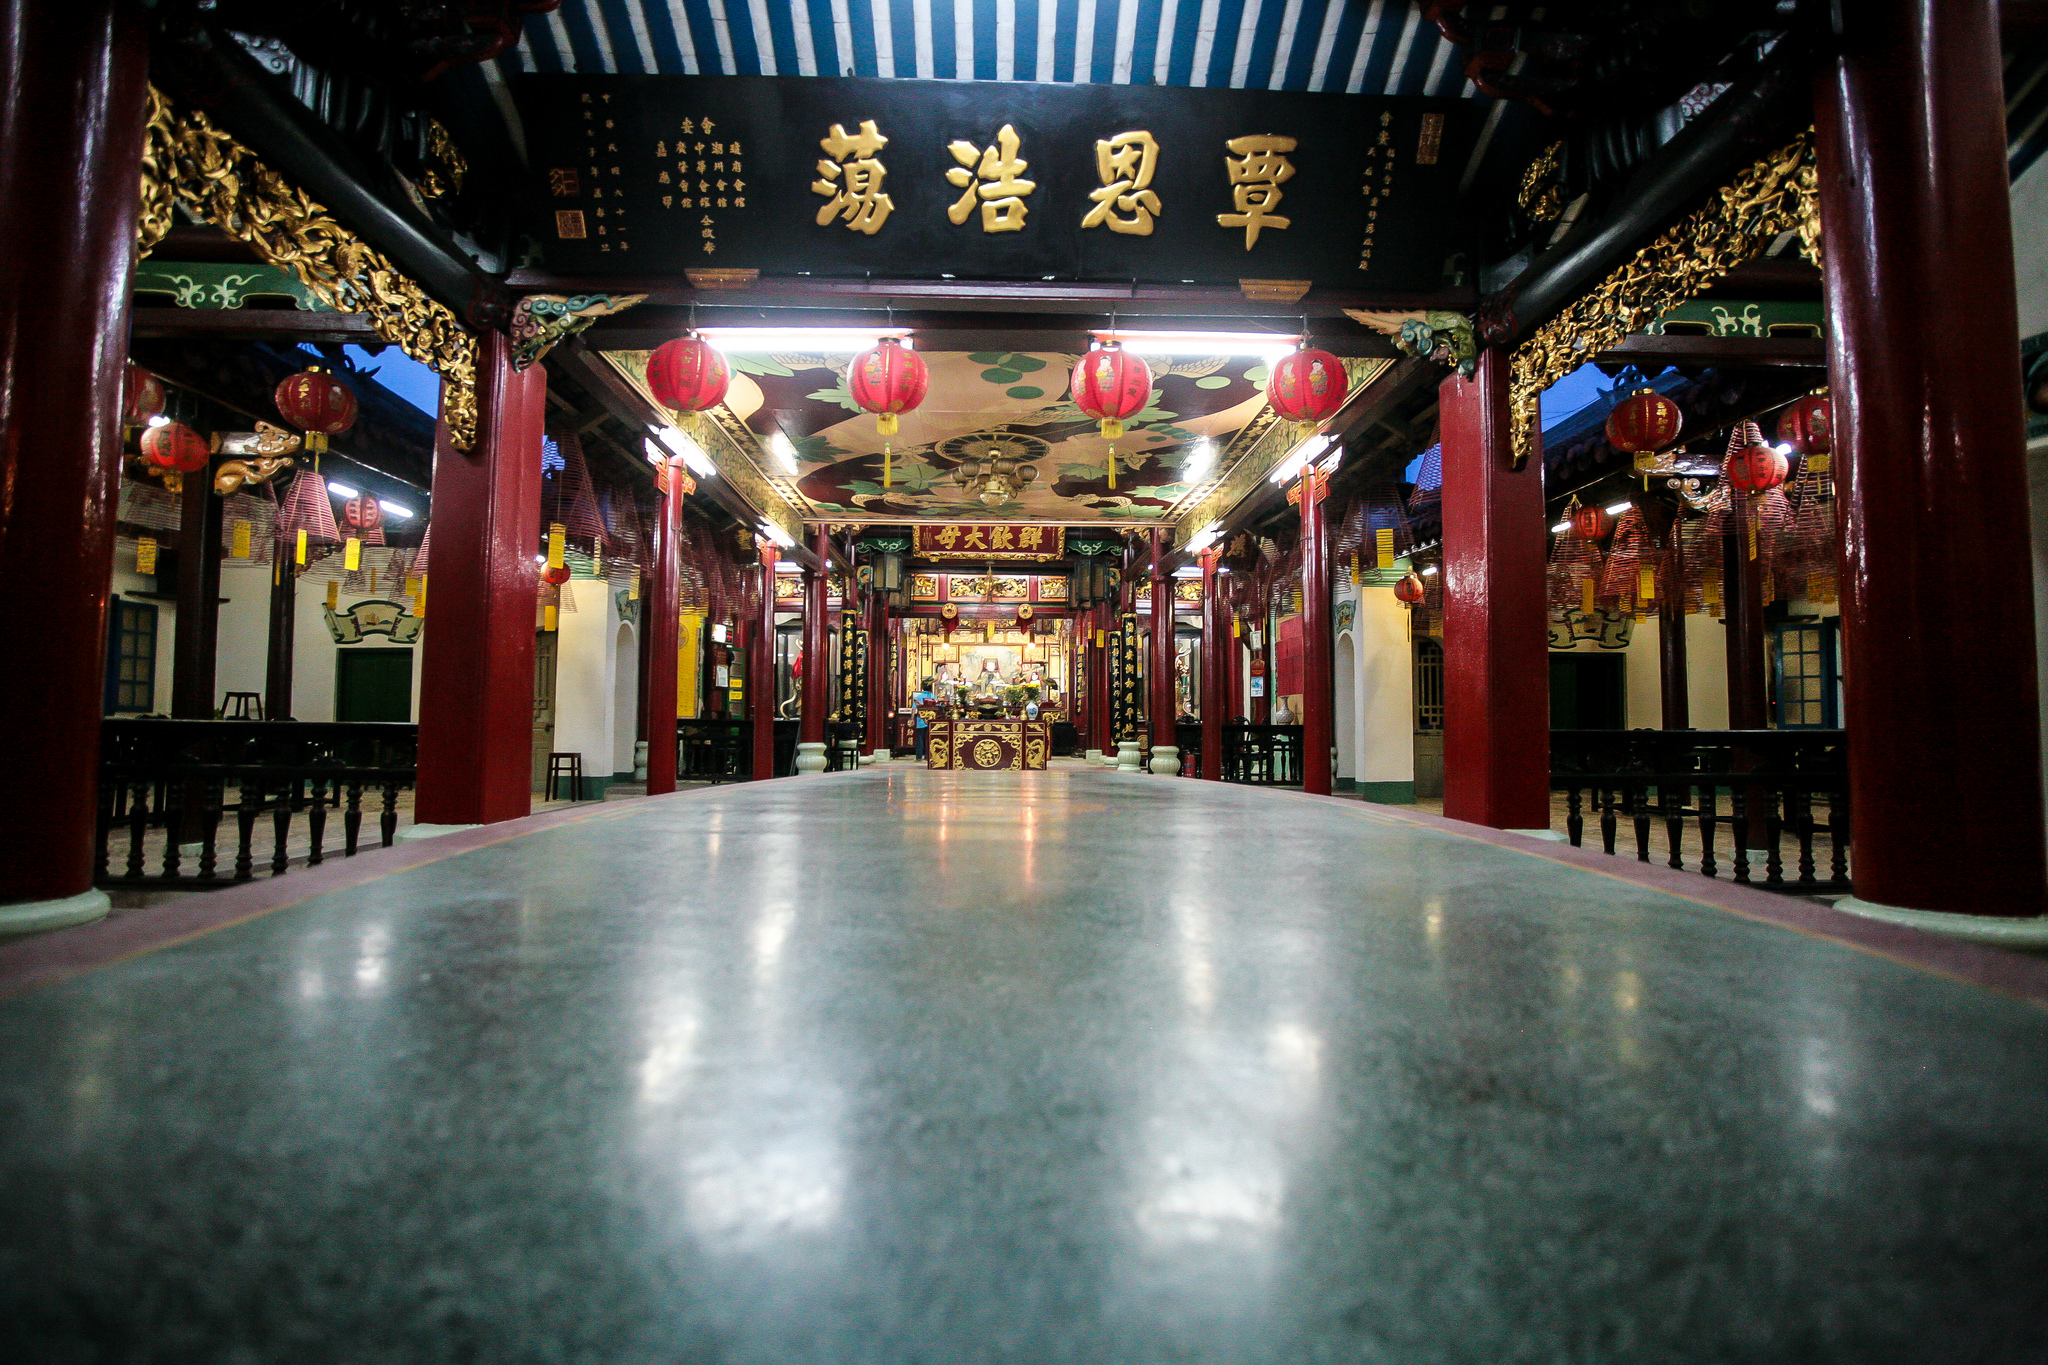 The interior of Phuoc Kien Assembly Hall, Vietnam